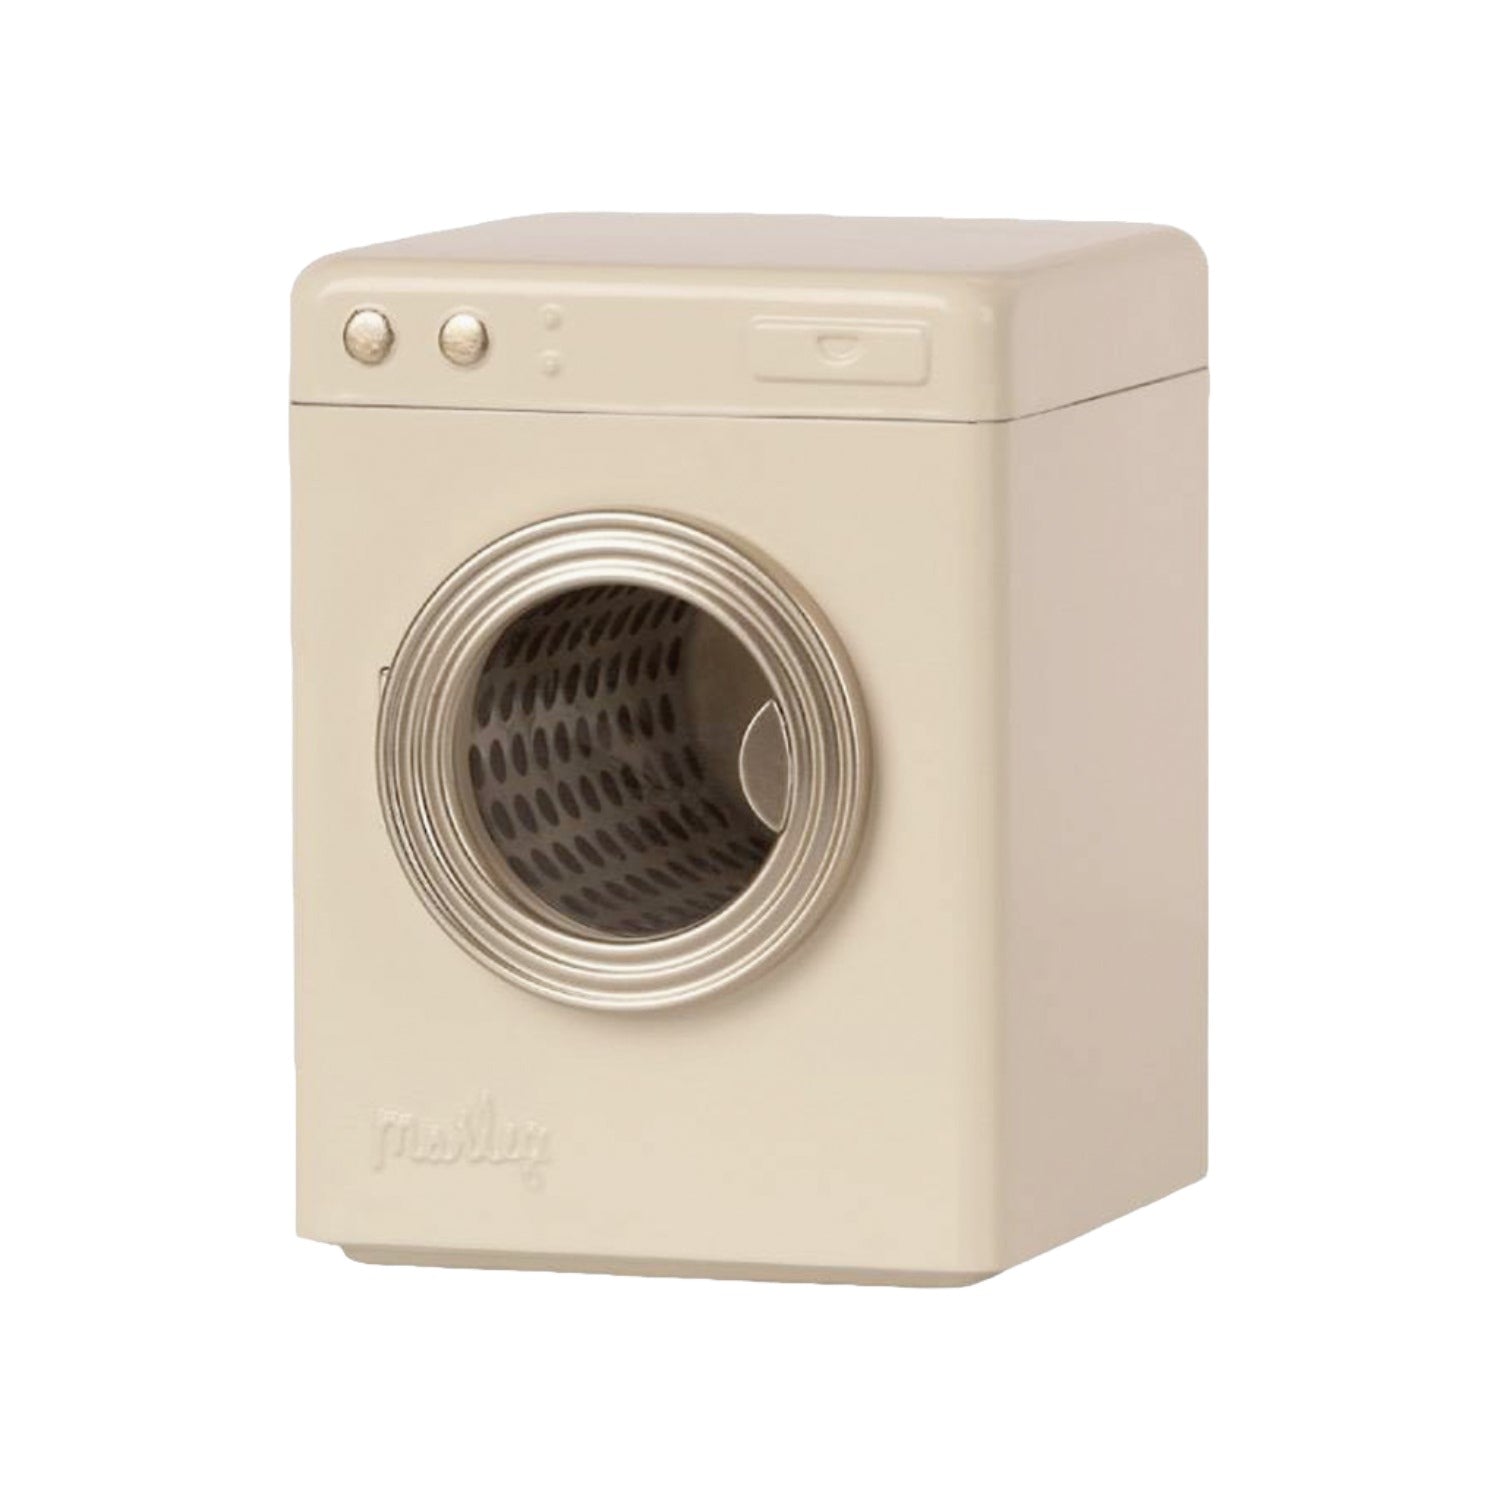 An image of Maileg Miniature Washing Machine - Metal Washing Machine - Dollhouse Accessories...